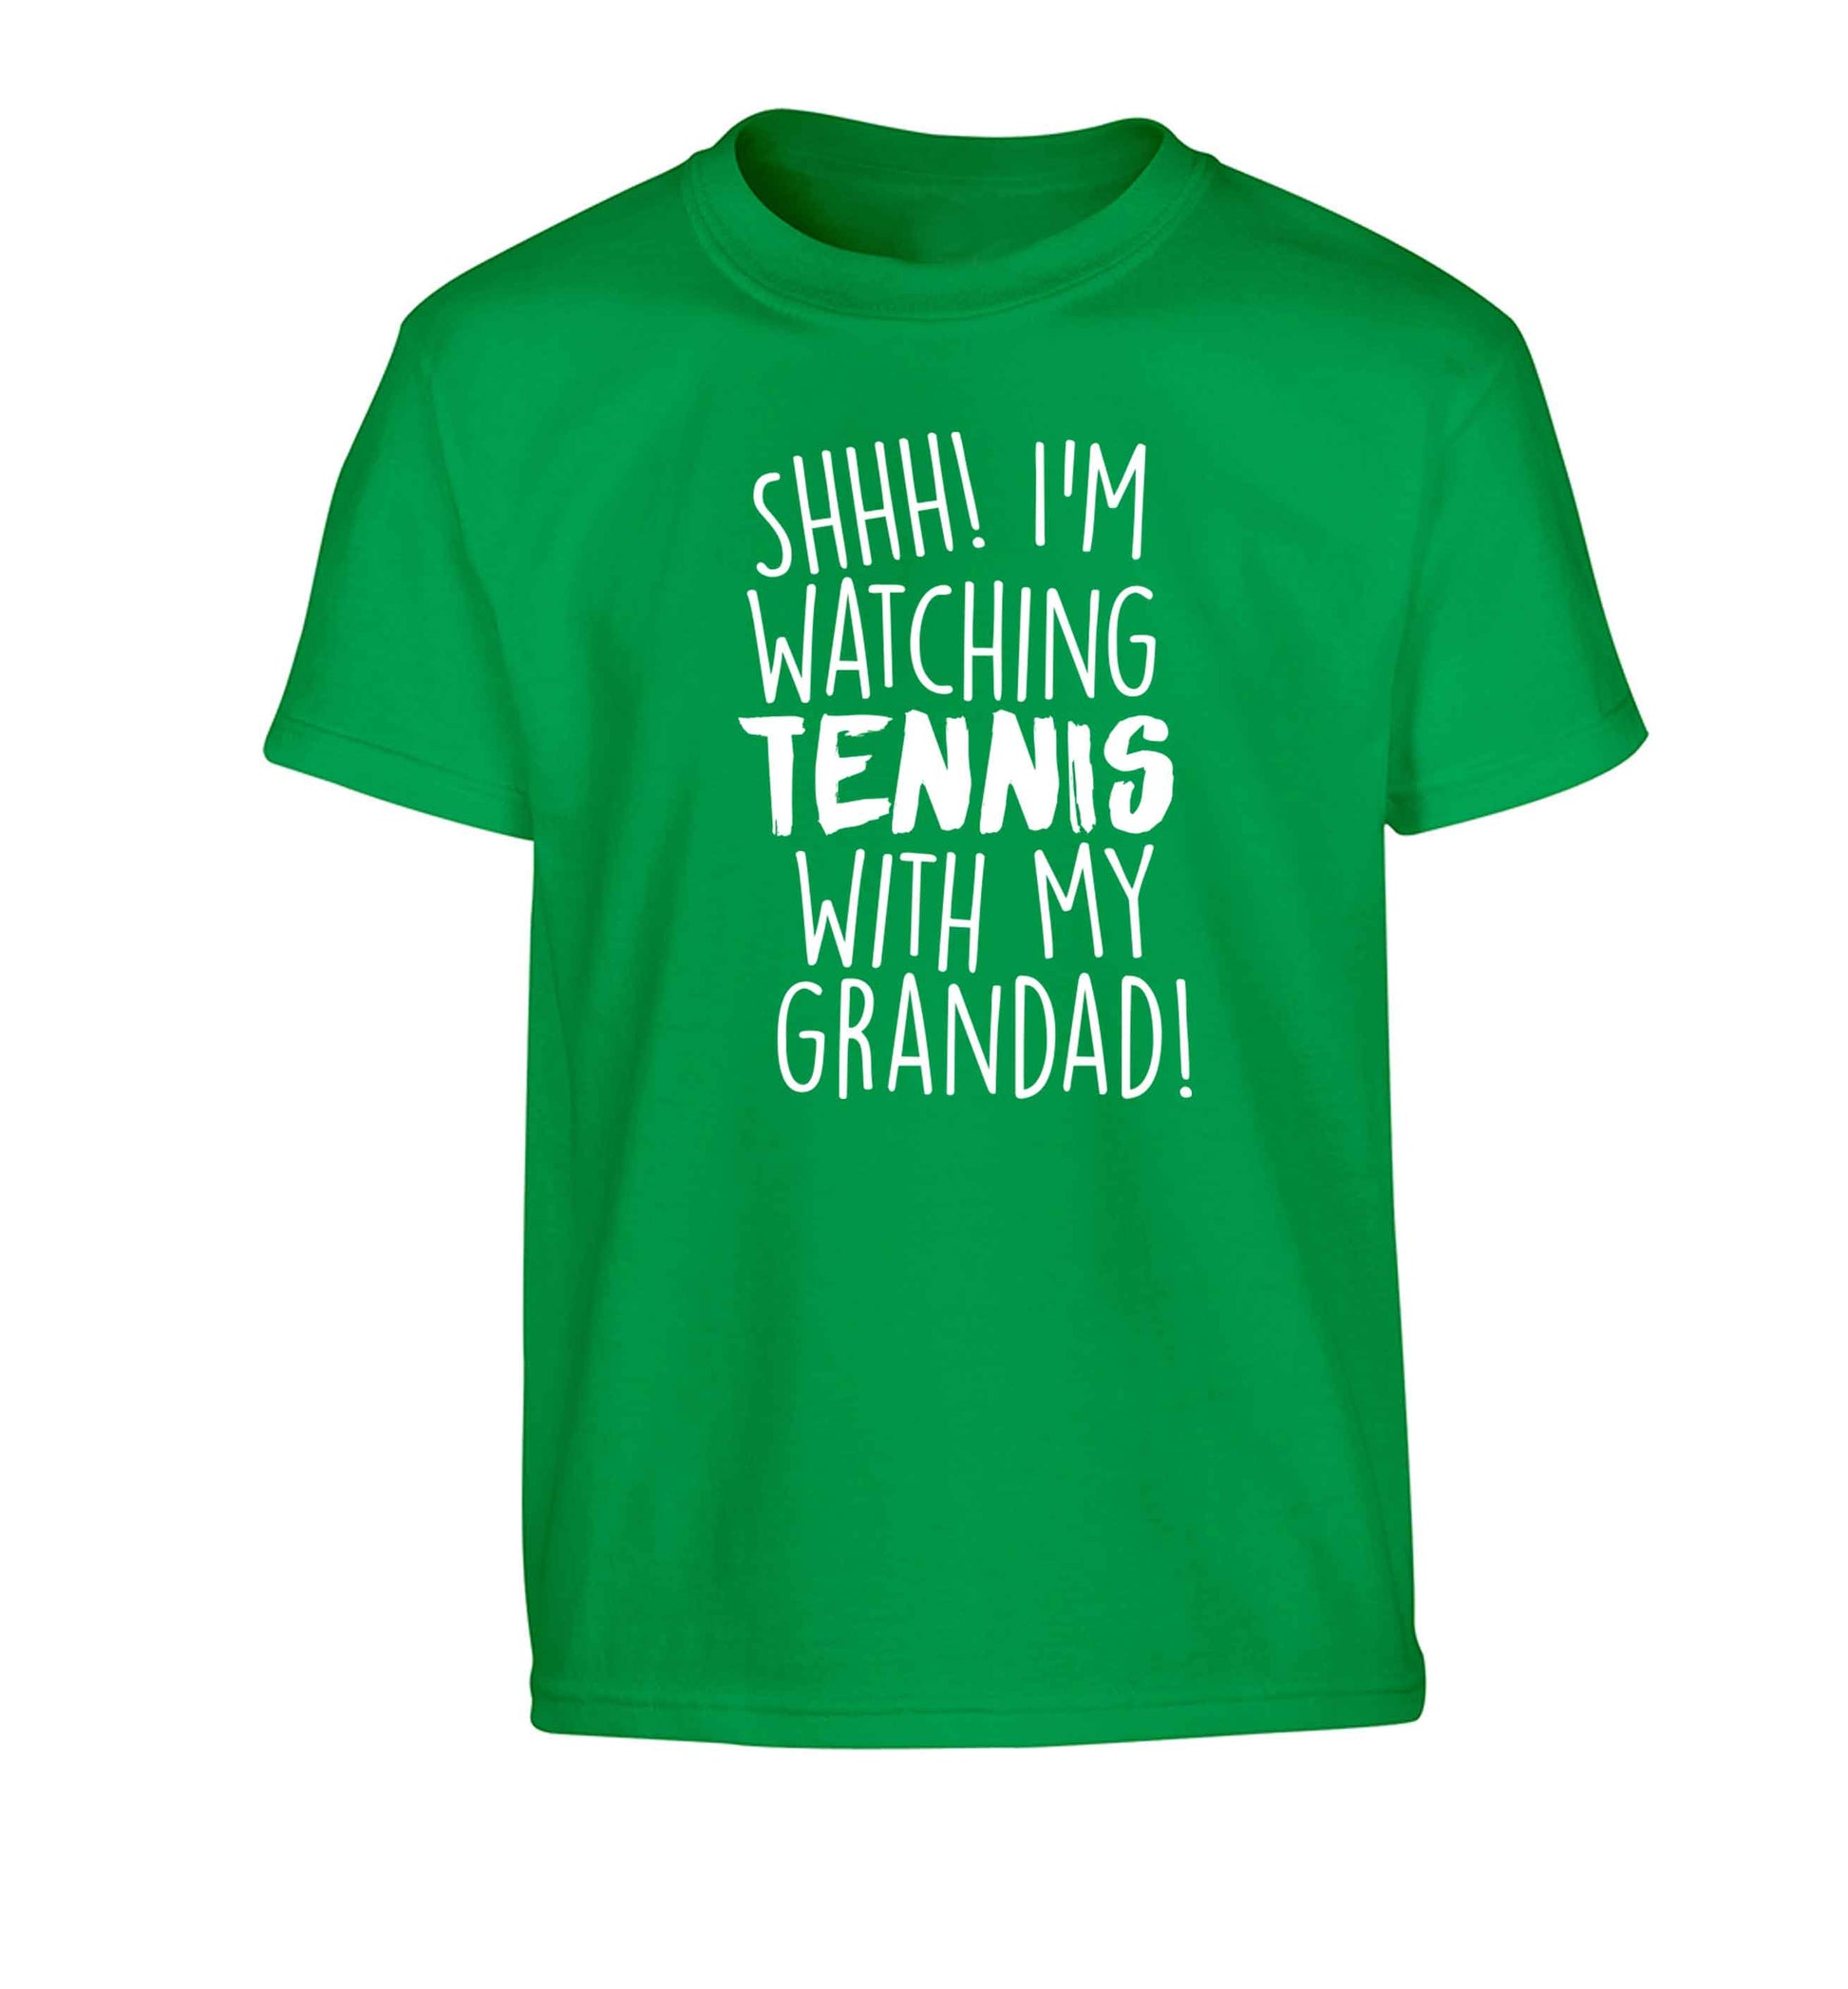 Shh! I'm watching tennis with my grandad! Children's green Tshirt 12-13 Years